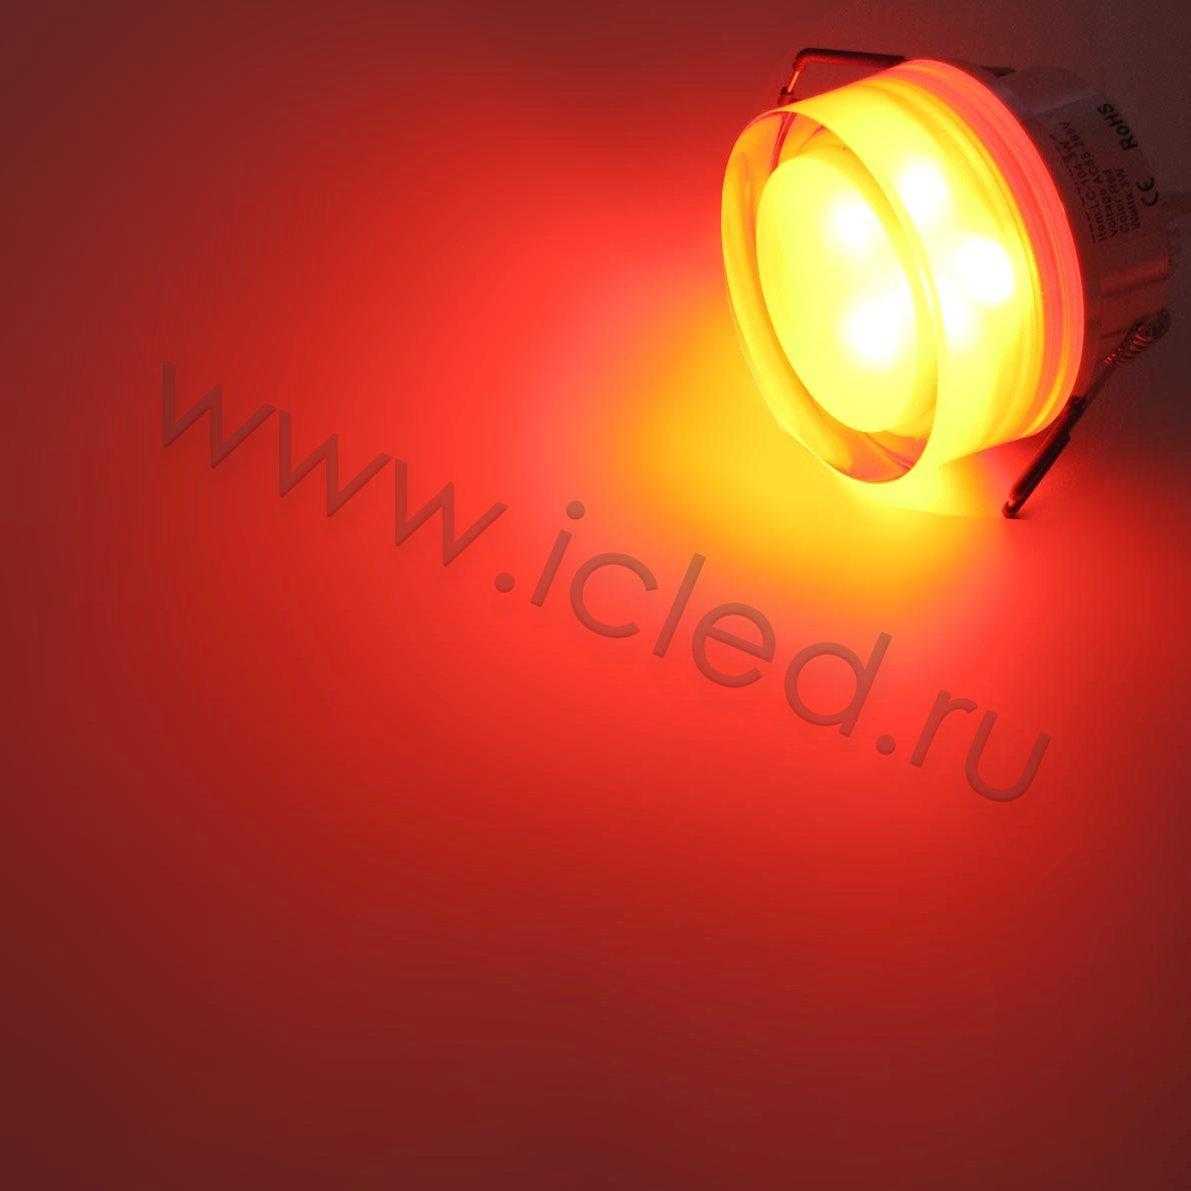 Светодиодные светильники Светодиодный светильник точечный RW cree (3W, Red)